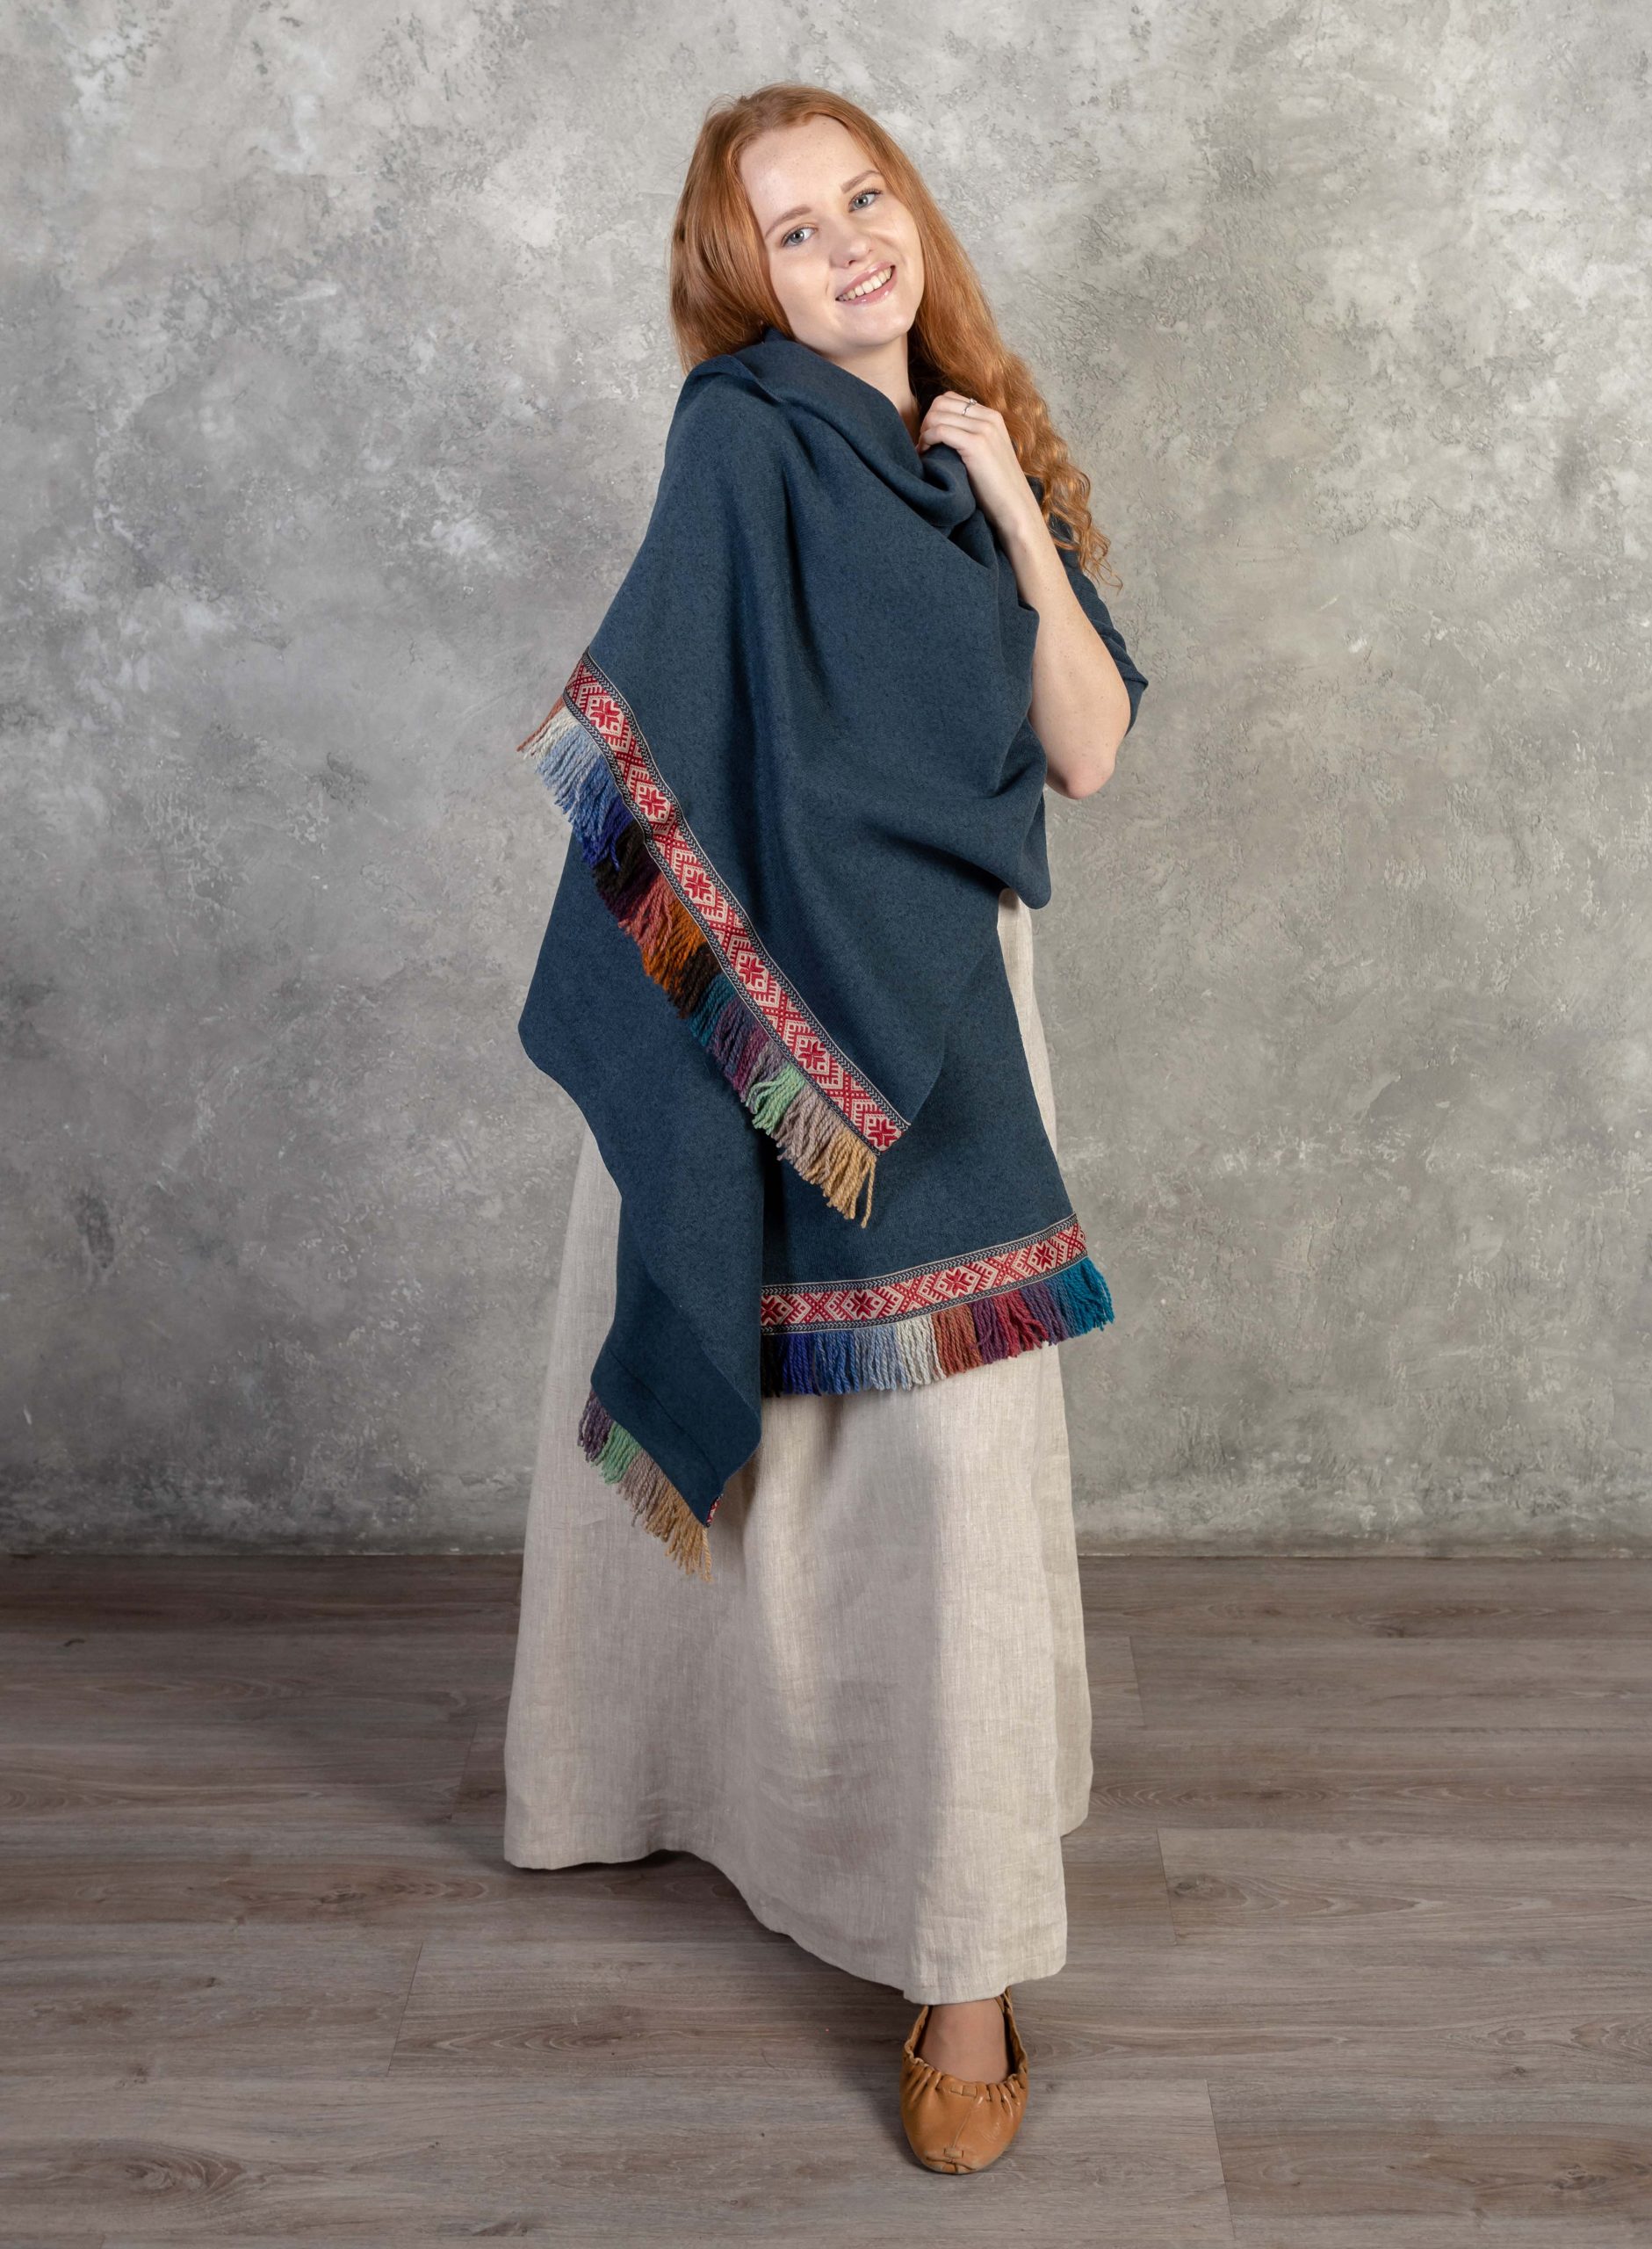 The shoulder shawl of soft fabric with wool yarn fringe